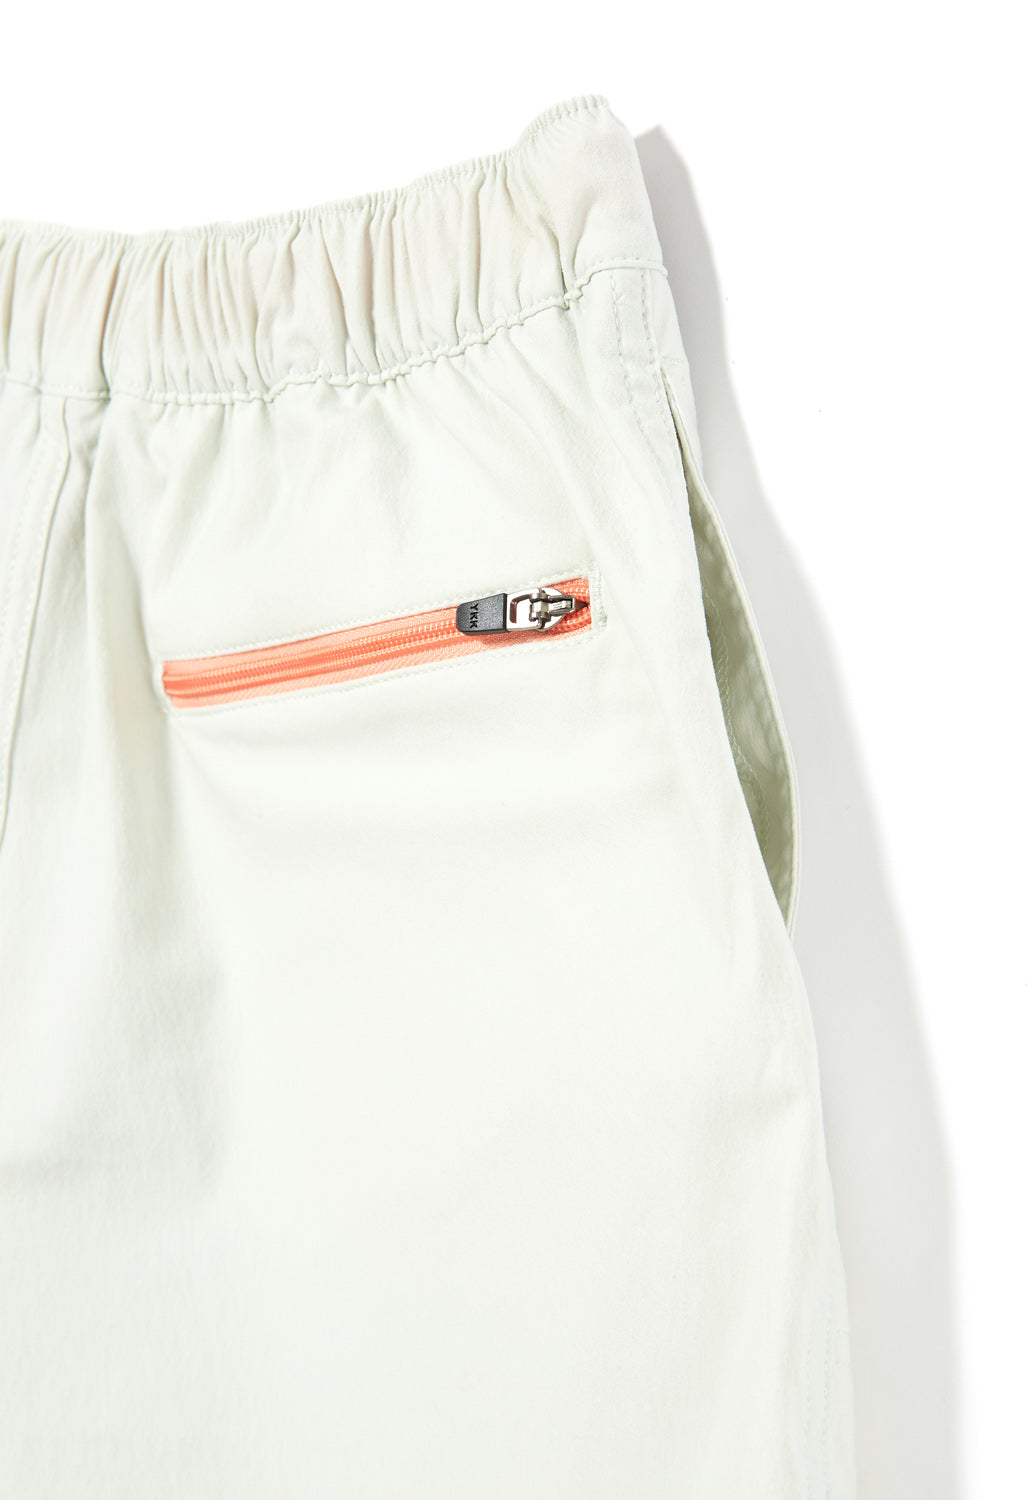 Topo Designs Women's River Shorts - Light Mint